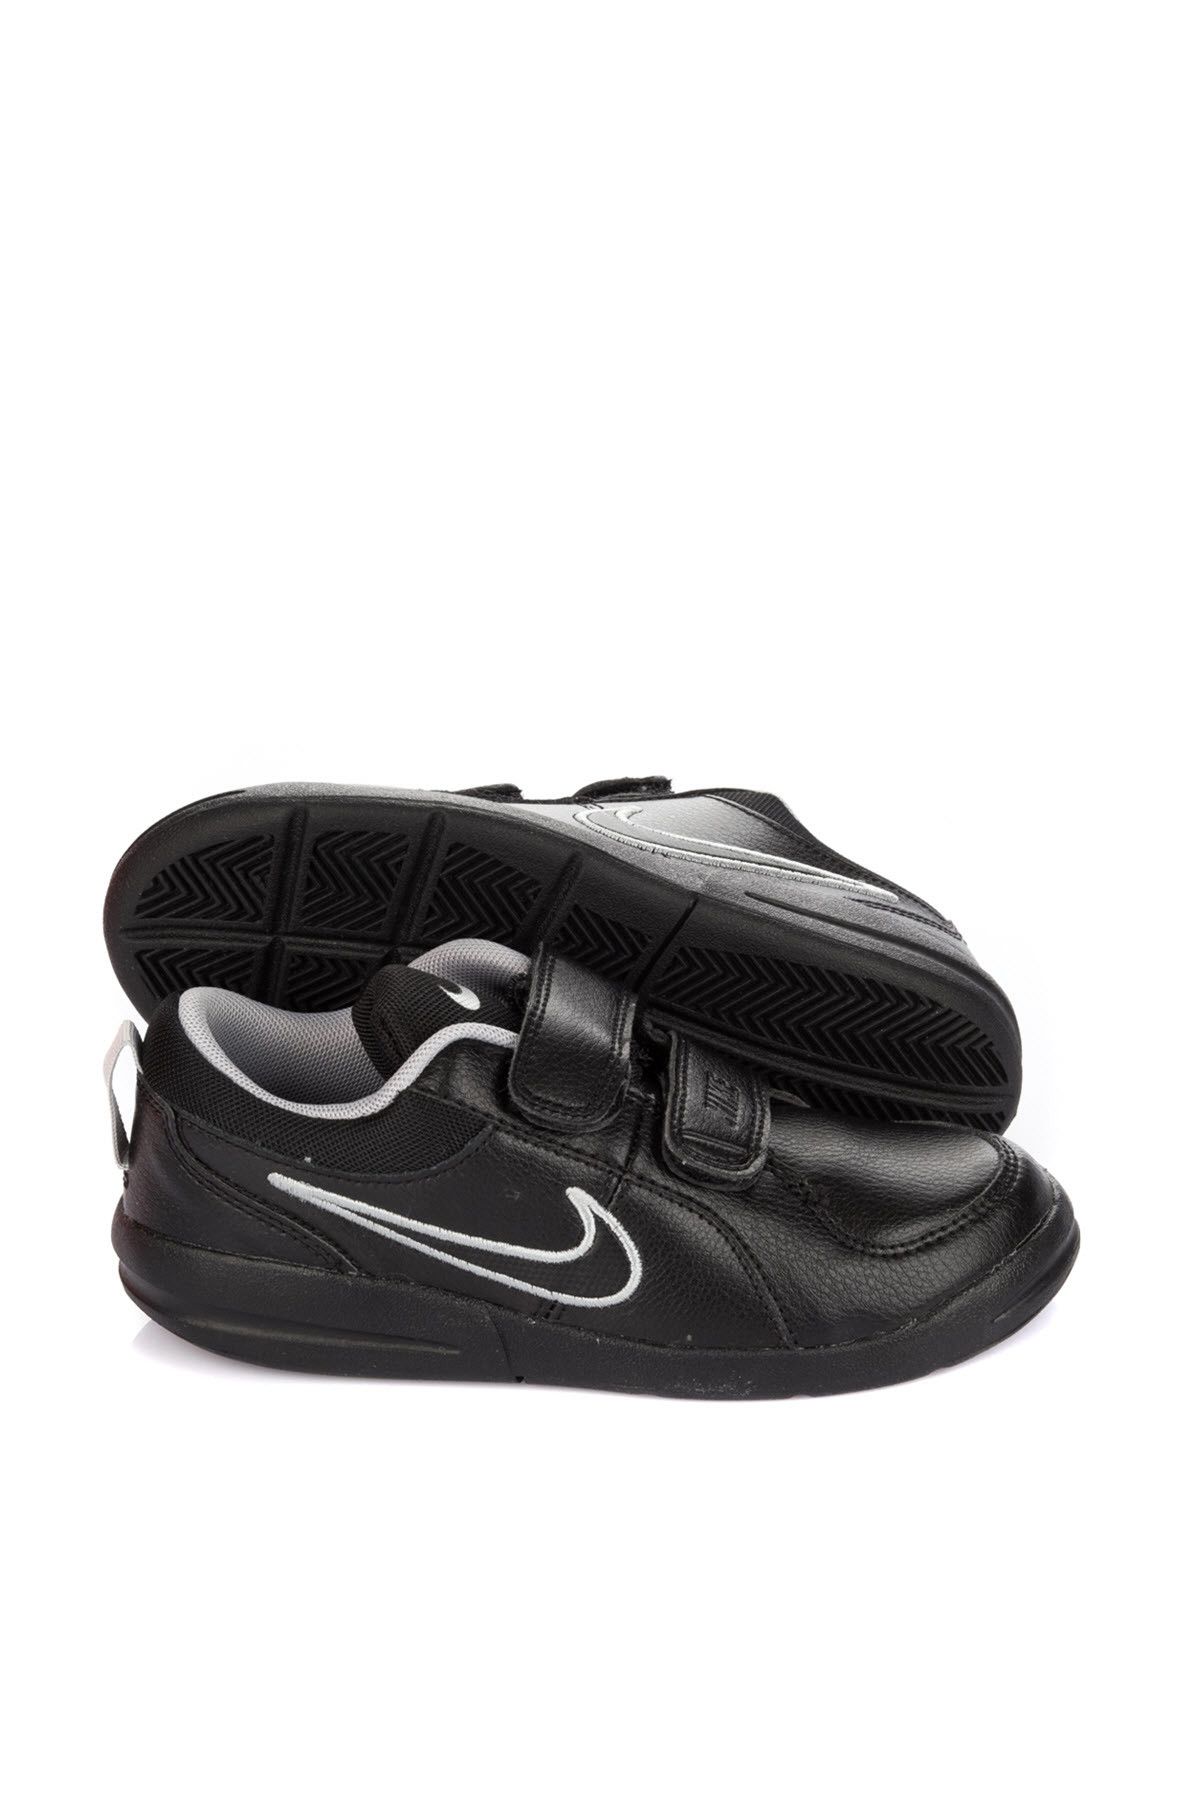 Nike Siyah Erkek Spor Ayakkabı - Pico 4 (Psv) - 454500-001